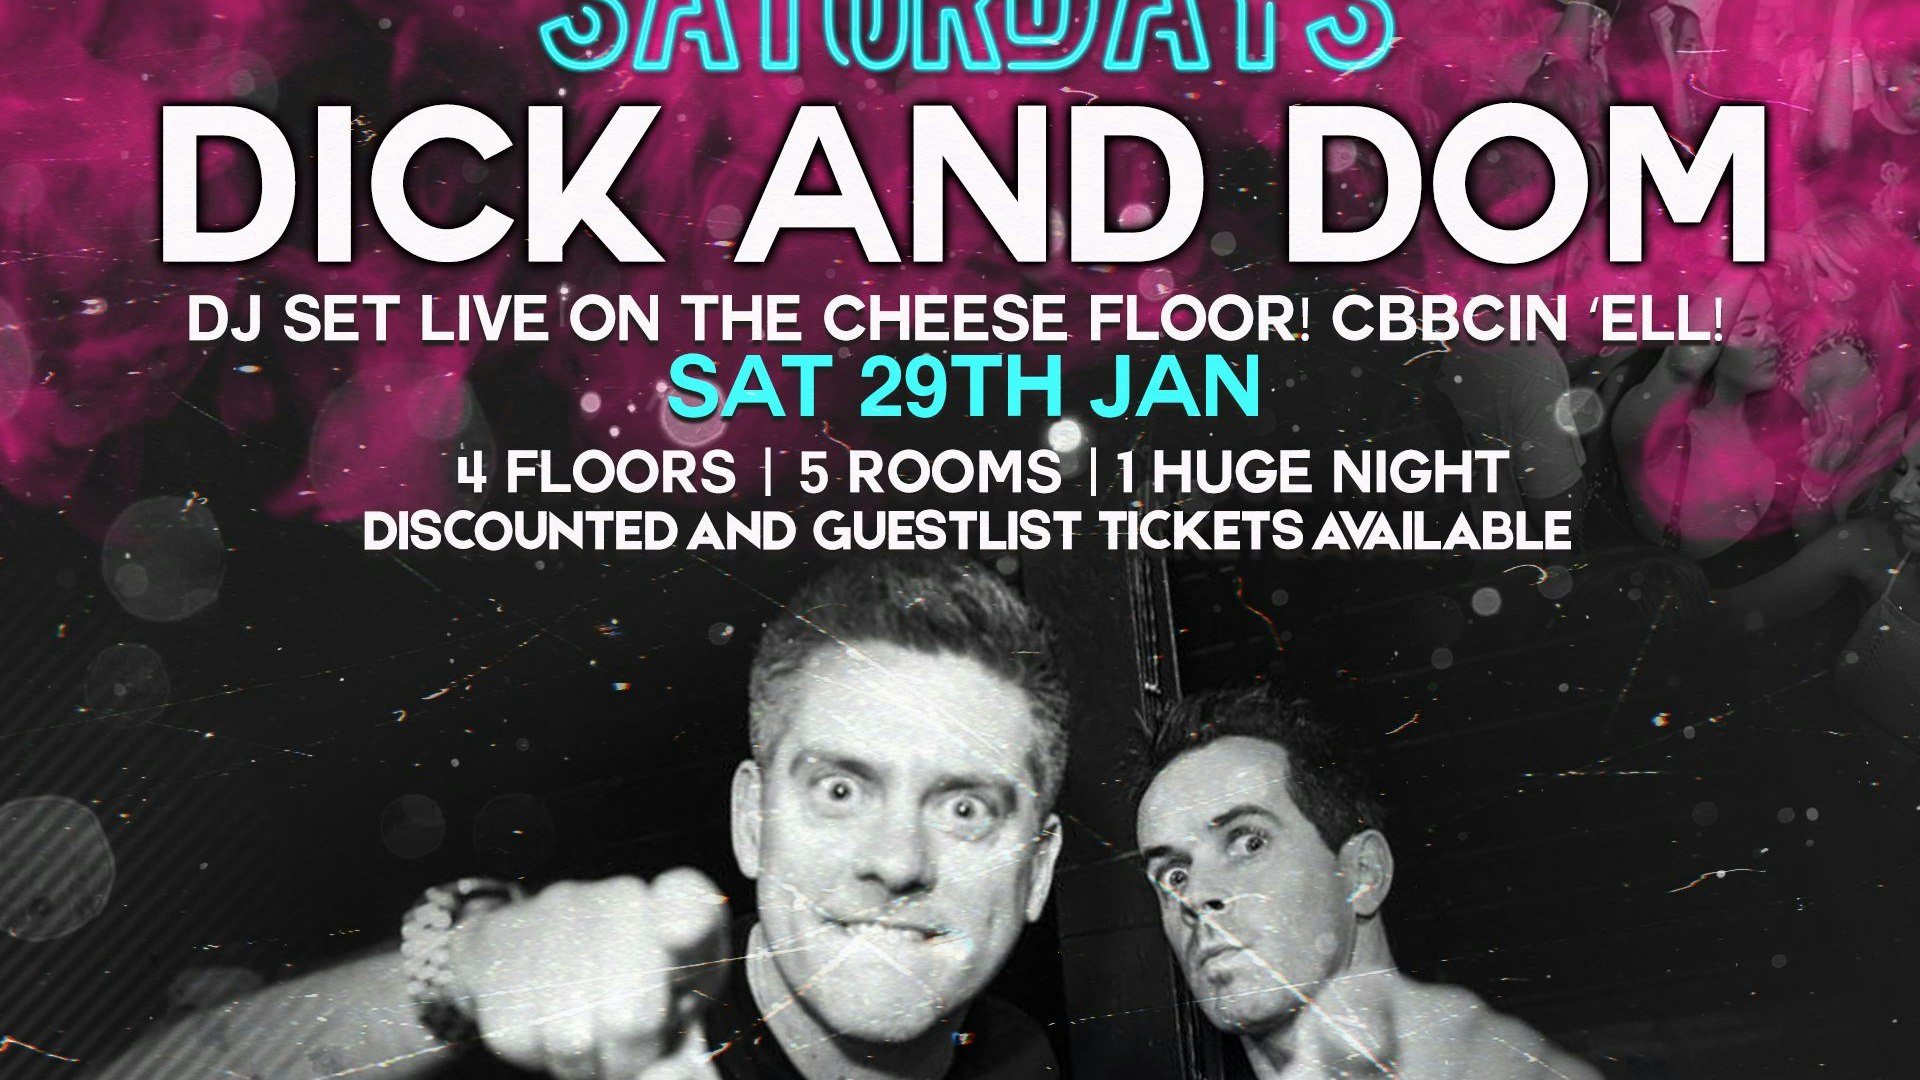 Love Saturday plus Dick and Dom – live dj set